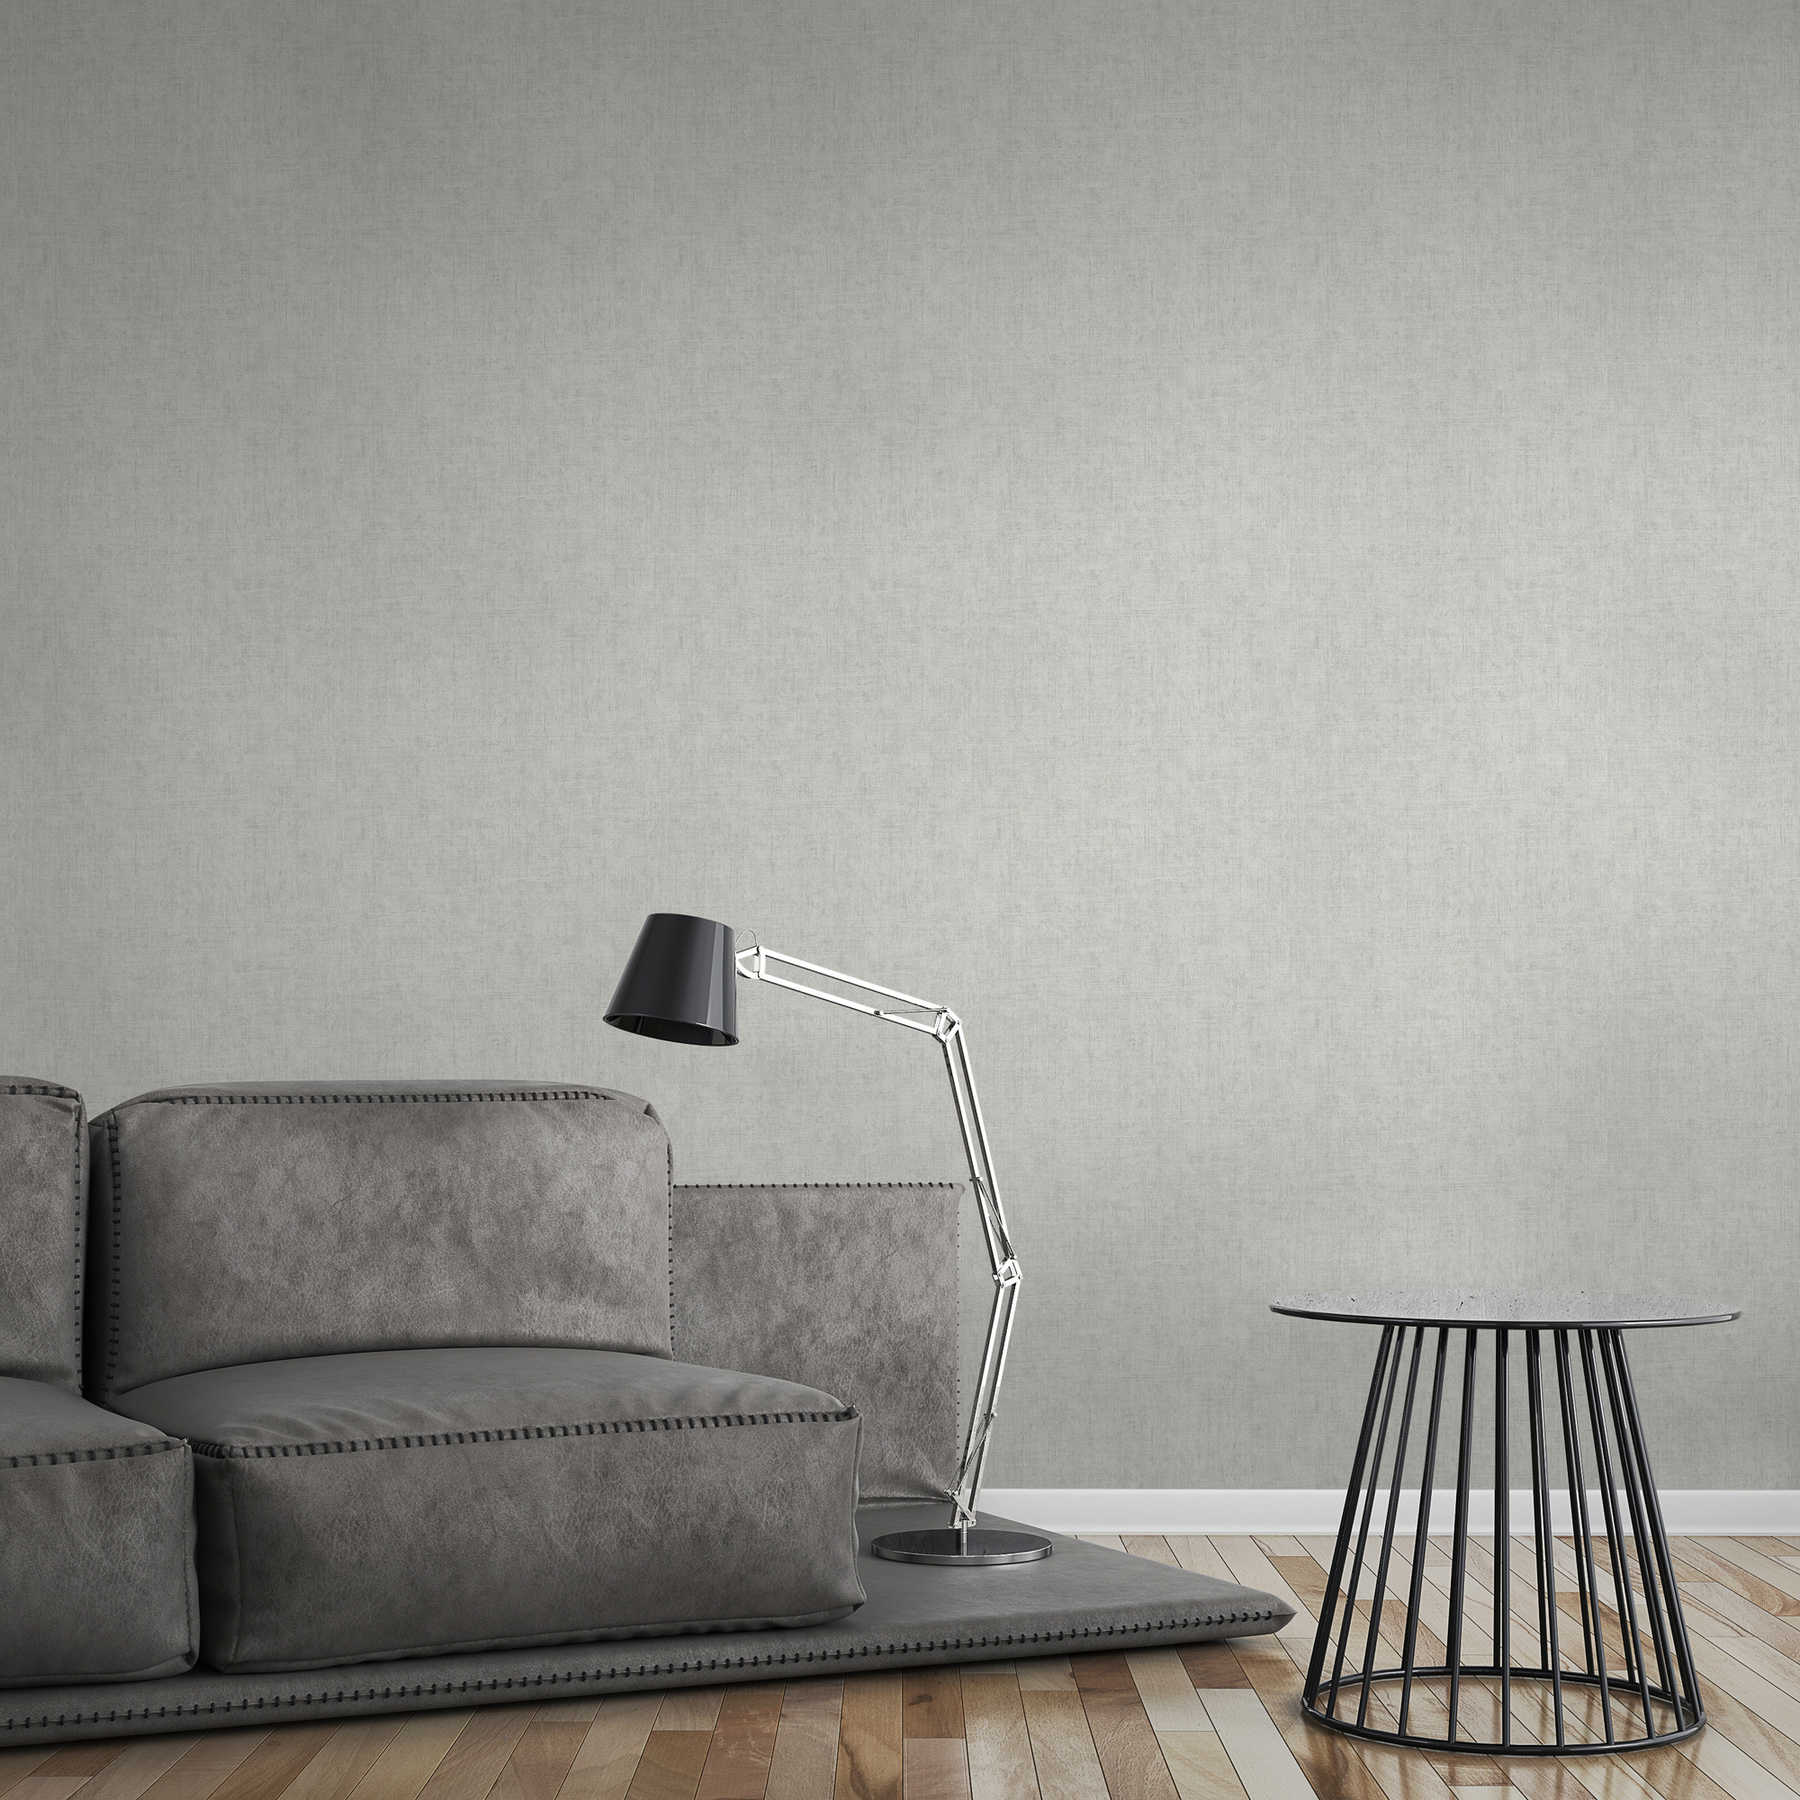             Light grey plain wallpaper with rustic plaster look in vintage design
        